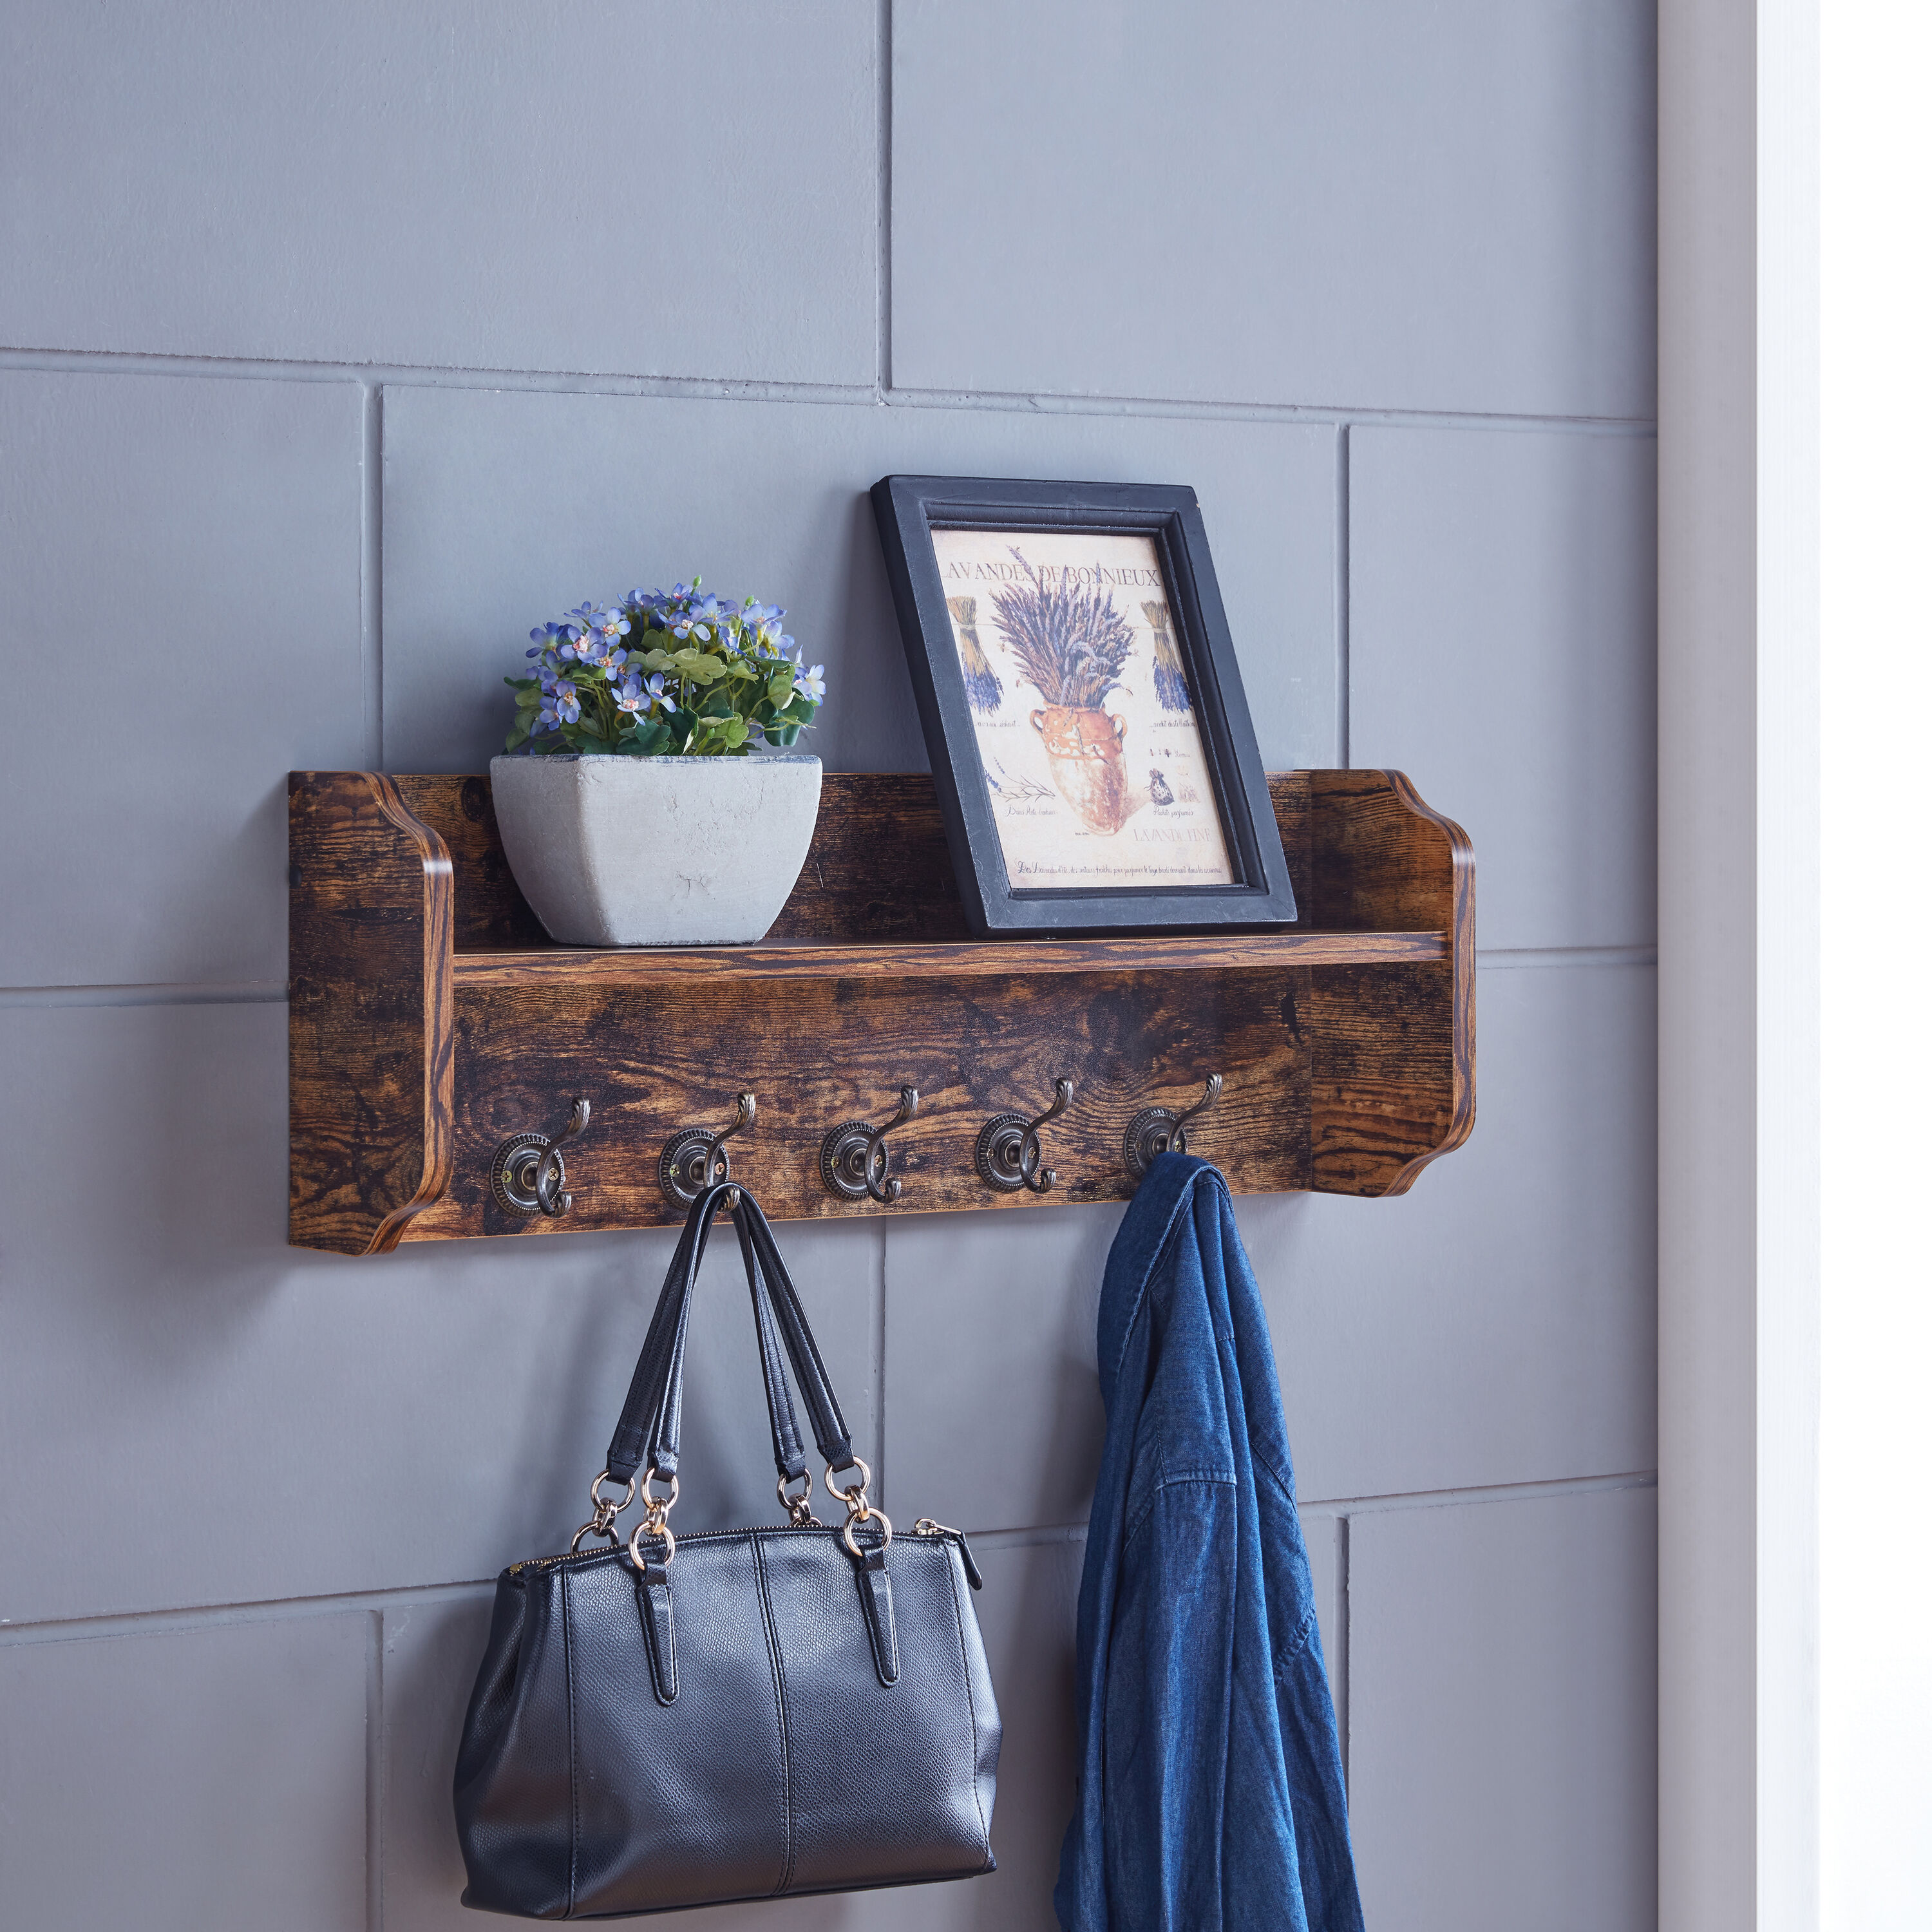 Danya B. Utility Wall Shelf with Hooks - Aged Wood